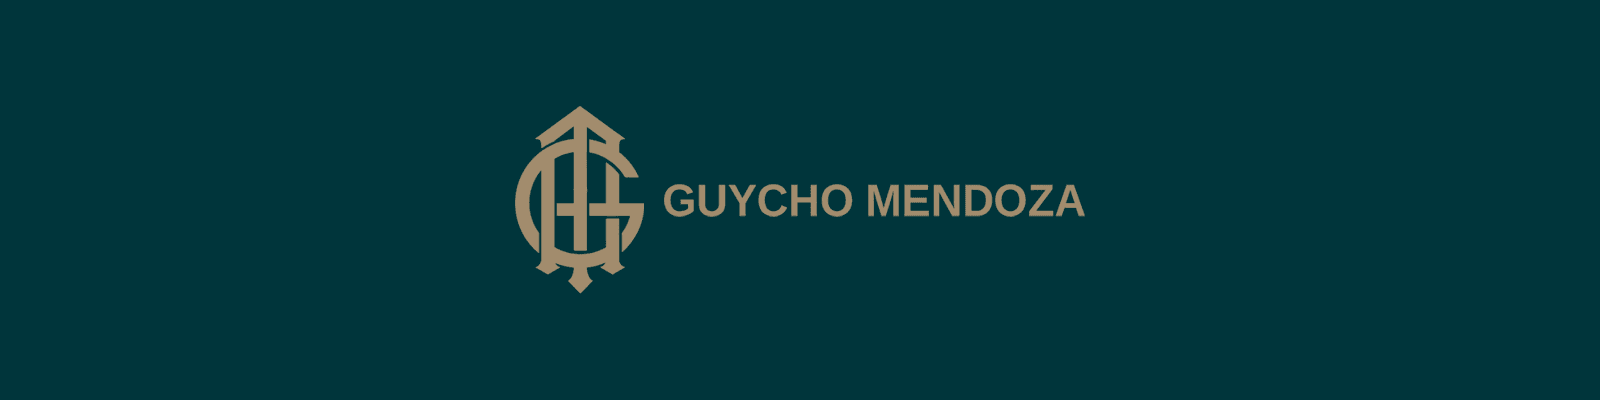 GuychoMendoza 横幅